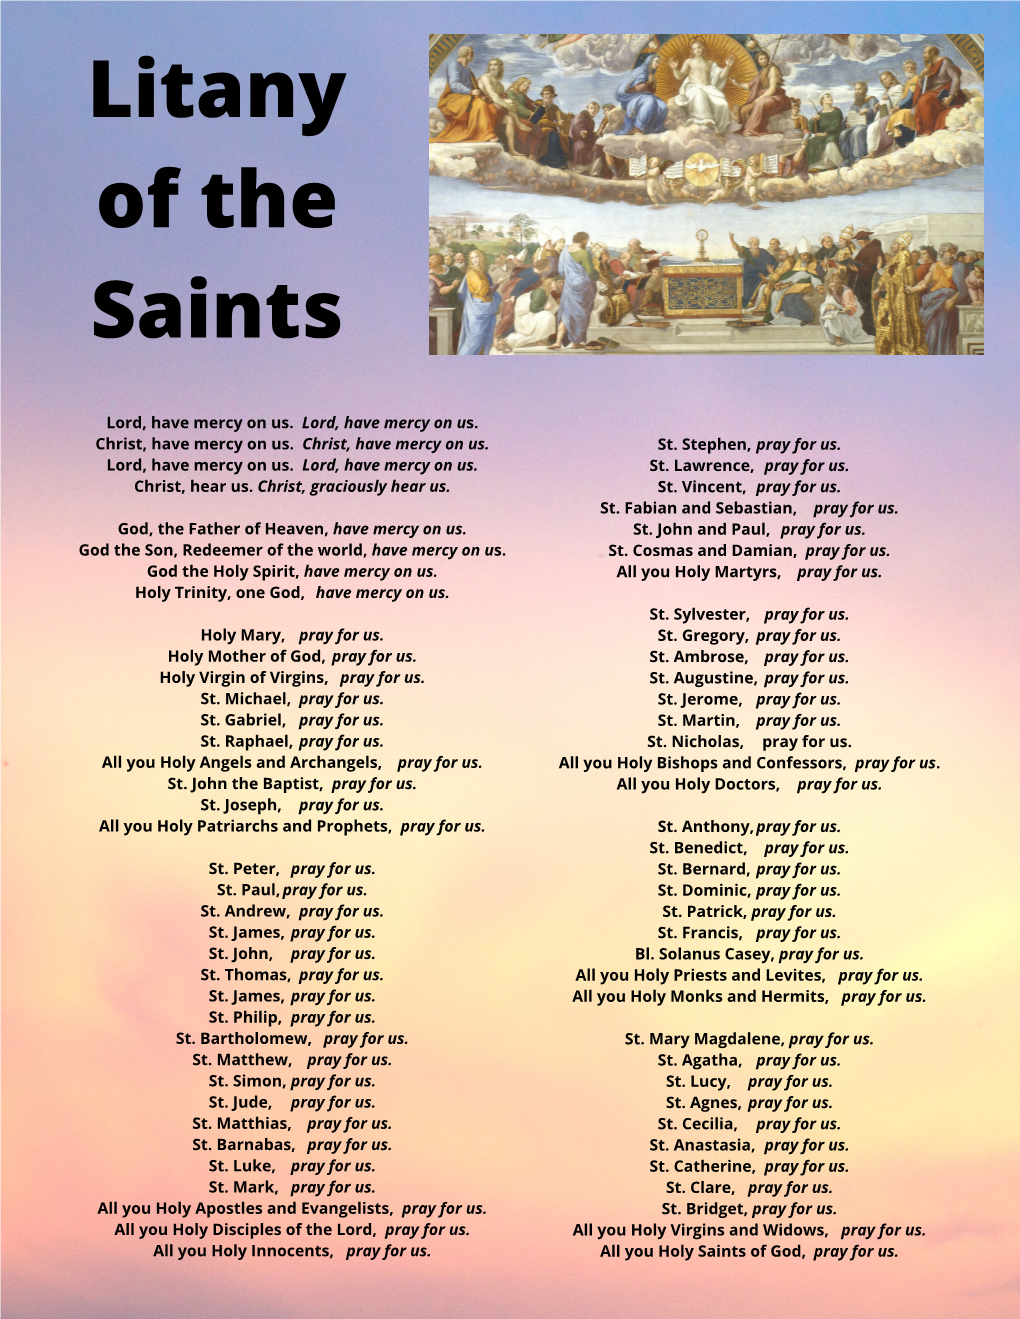 Litany of the Saints